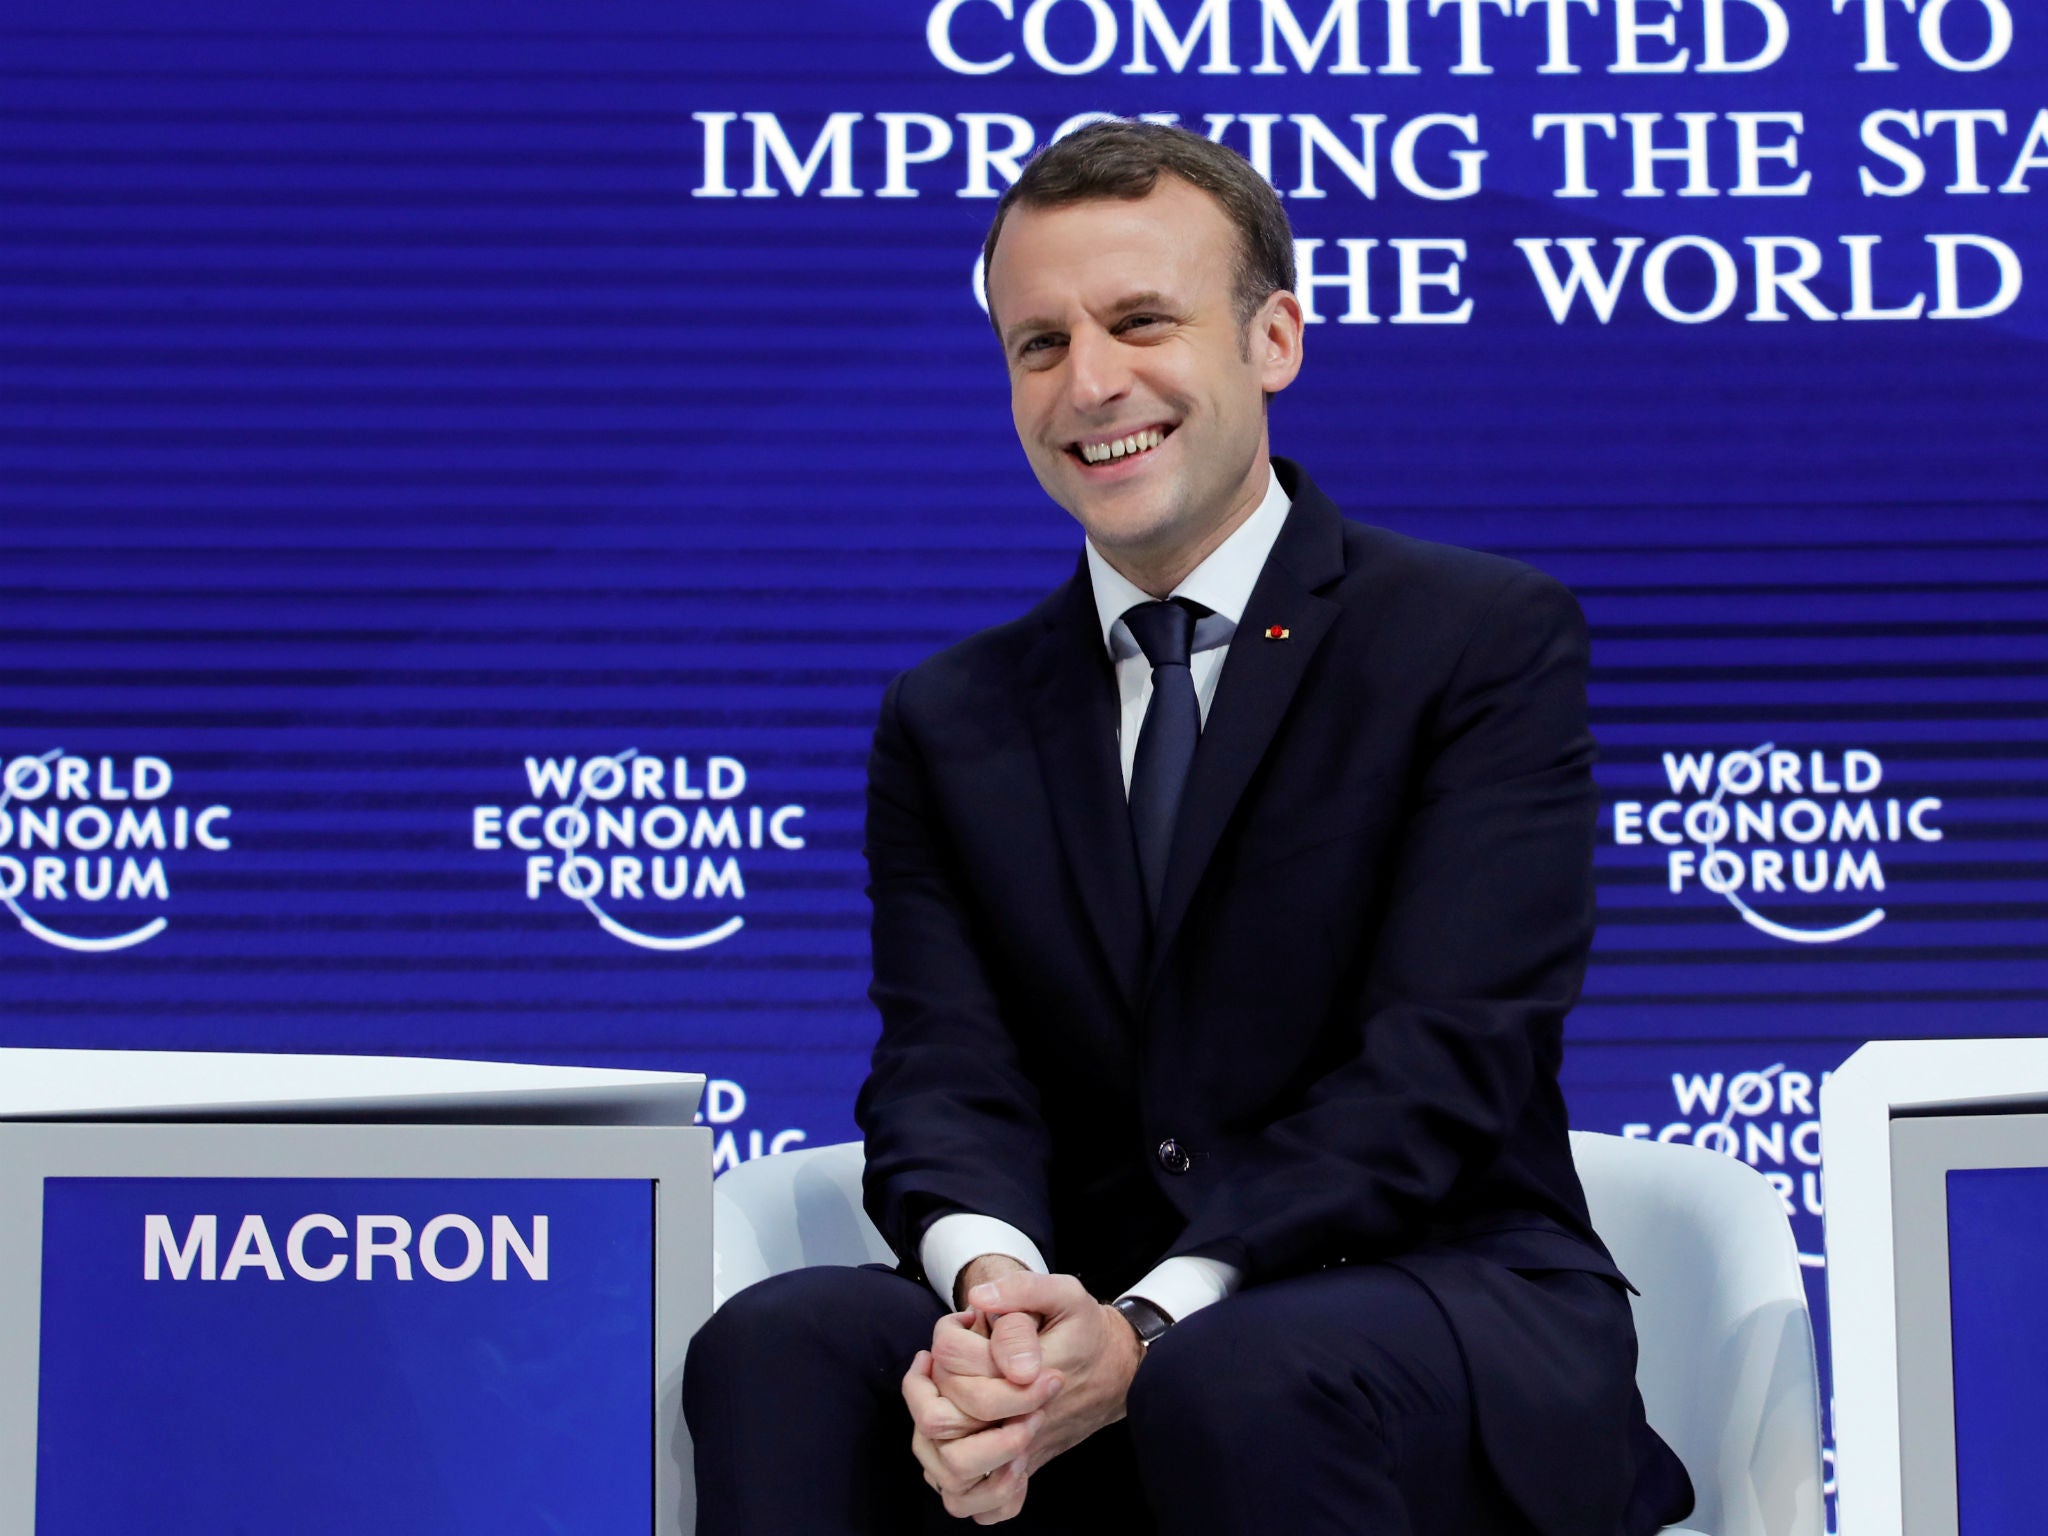 Emmanuel Macron gestures at the World Economic Forum annual meeting in Davos, Switzerland